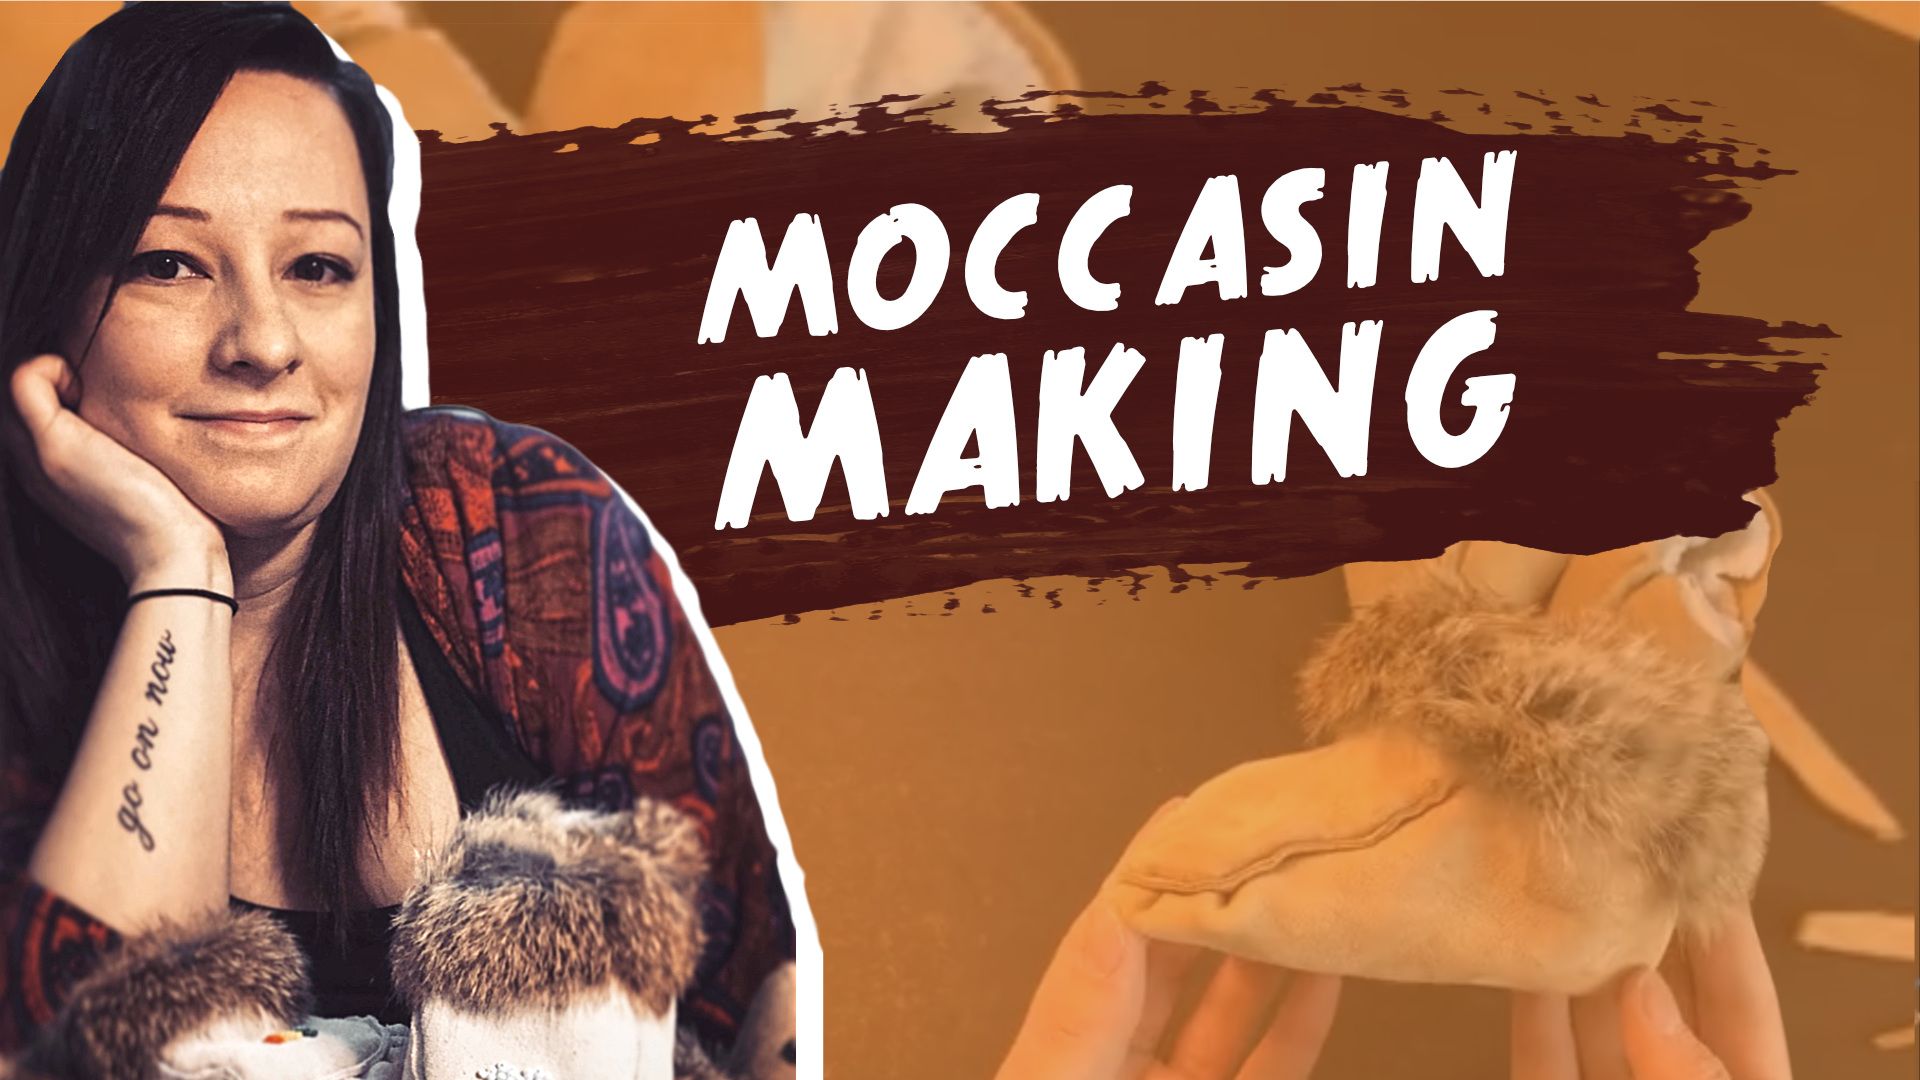 Moccasin Making